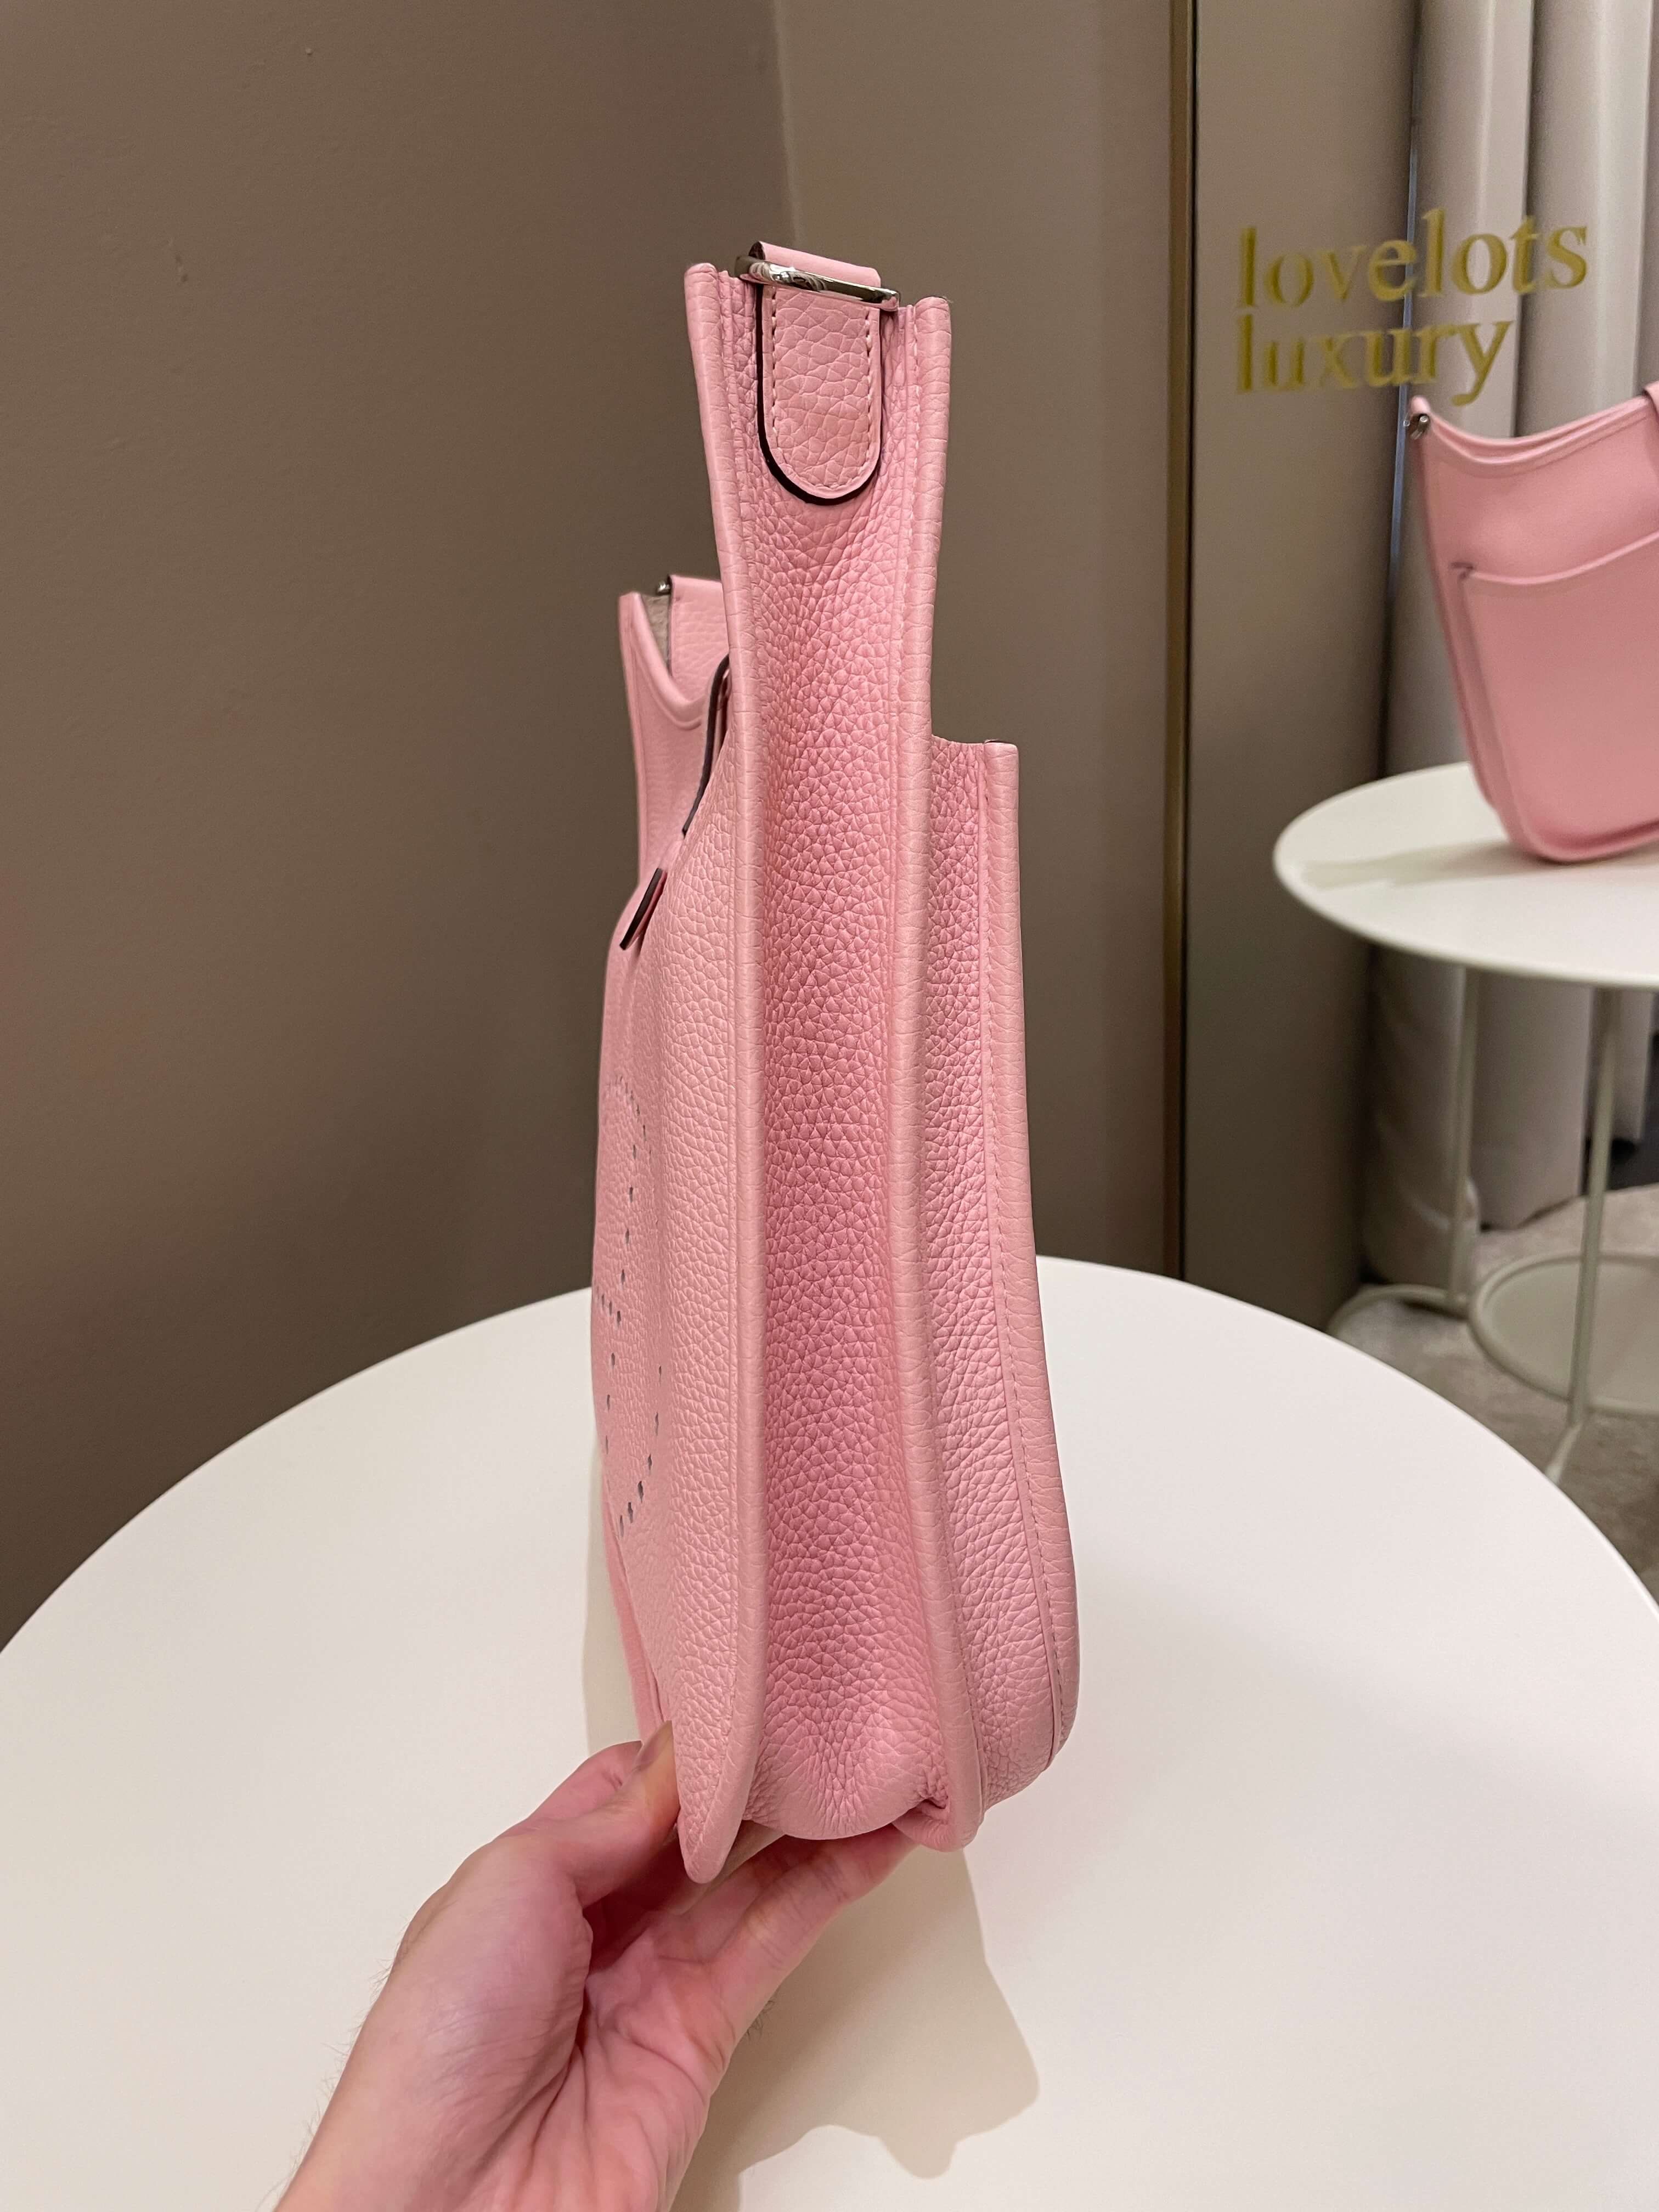 Hermes Pink Rose Sakura Evelyne III Pm Messenger Bag - MAISON de LUXE